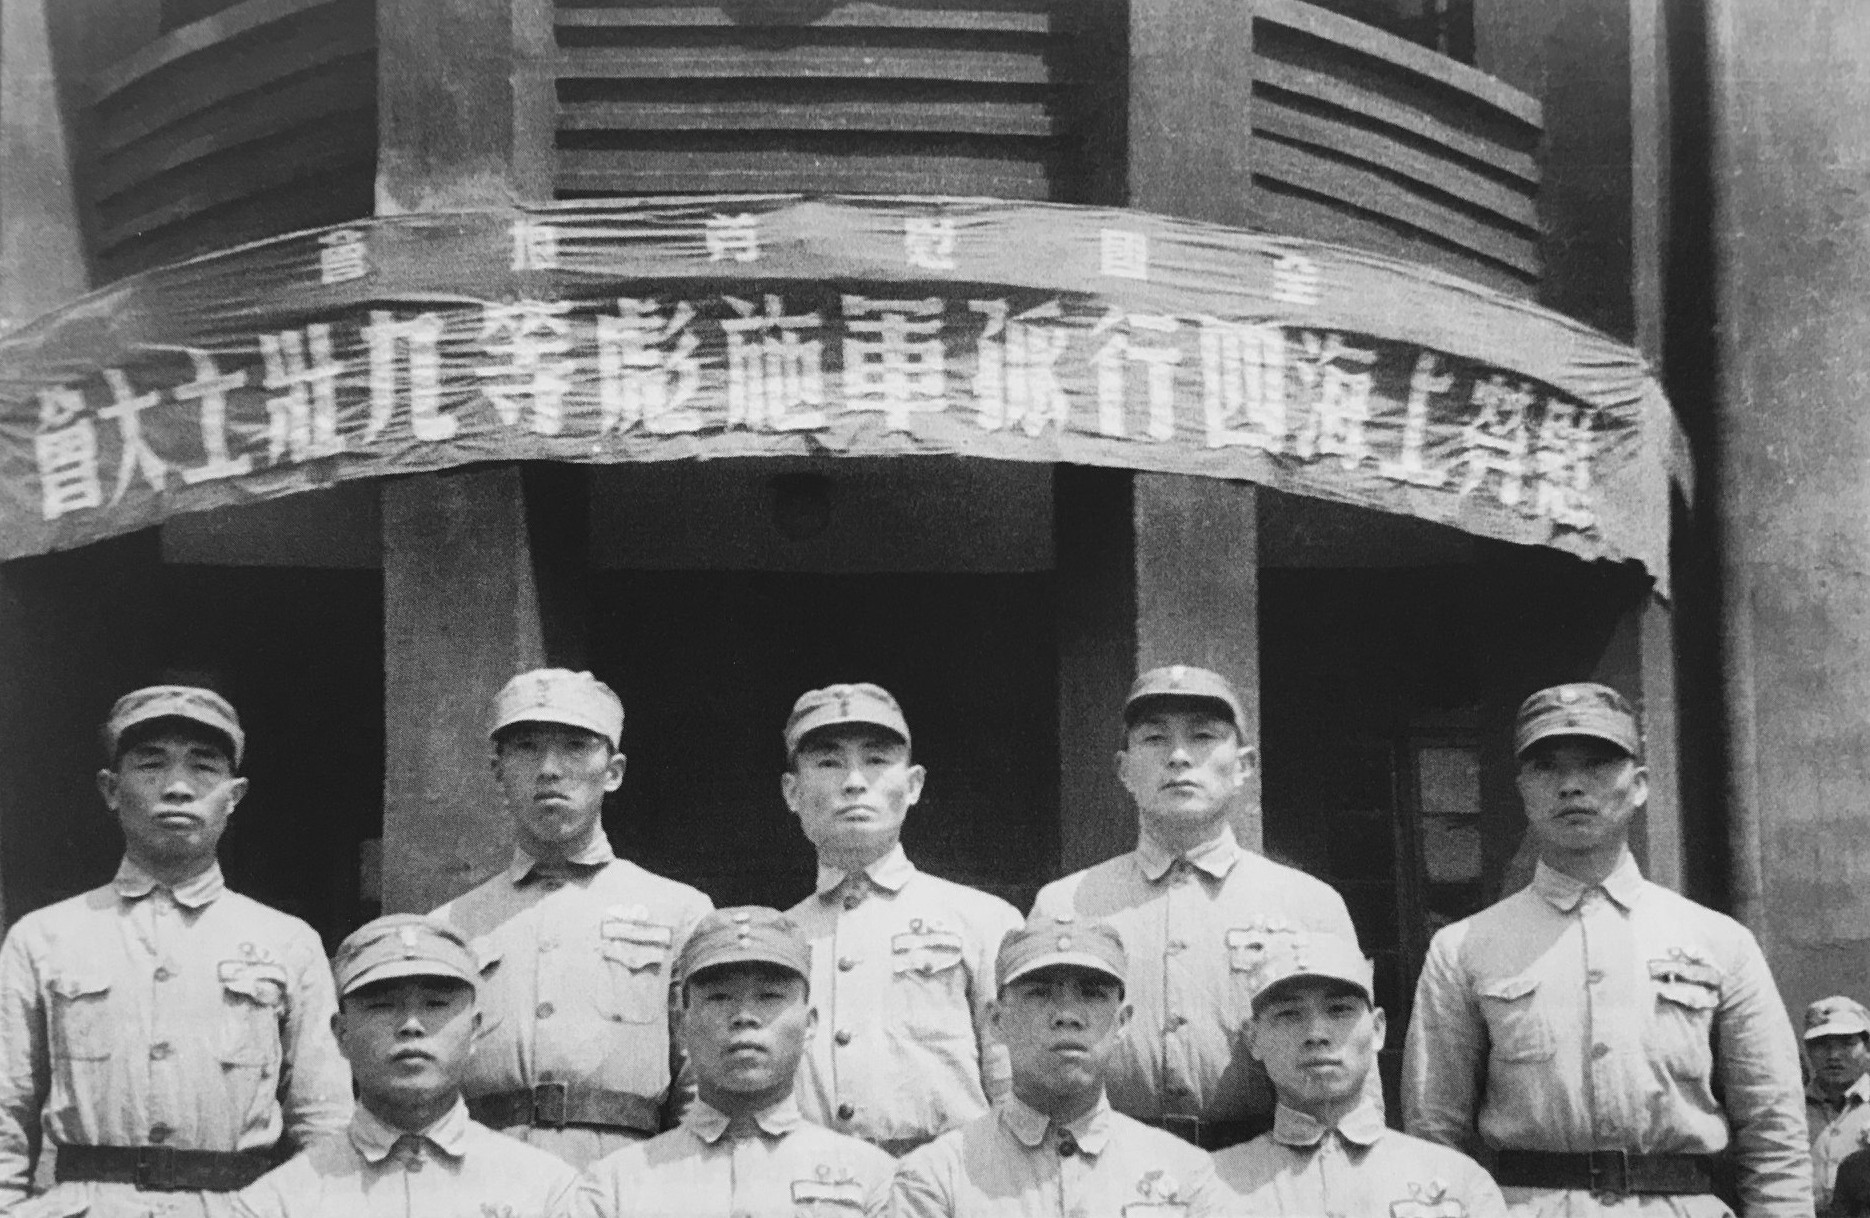 Veterans of the Shanghai Sihang Warehouse engagement at an event, China, 1943